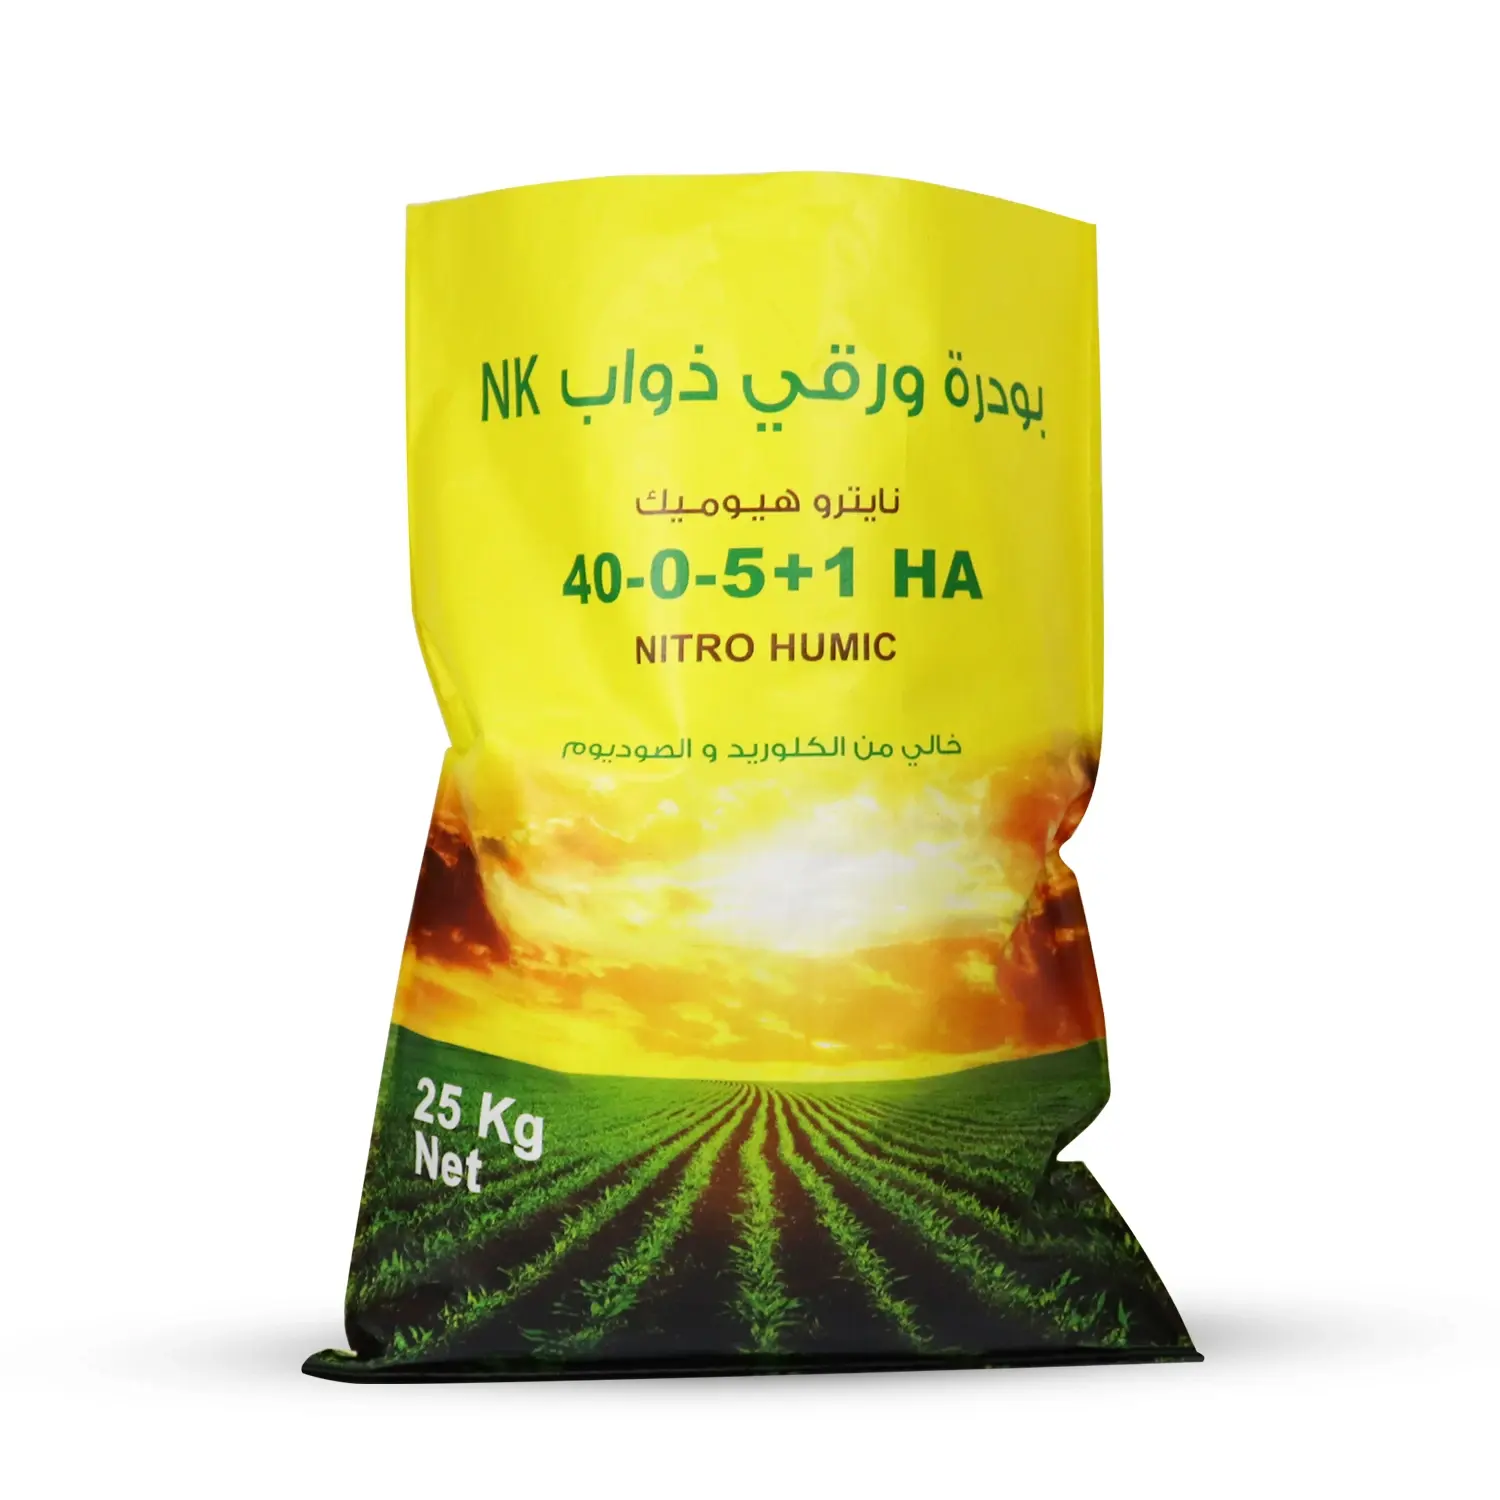 चावल गेहूं फसल पैकेजिंग के लिए गर्म बिक्री वाले उच्च गुणवत्ता वाले कस्टम पीपी बुना प्लास्टिक मजबूत पैकेजिंग बैग